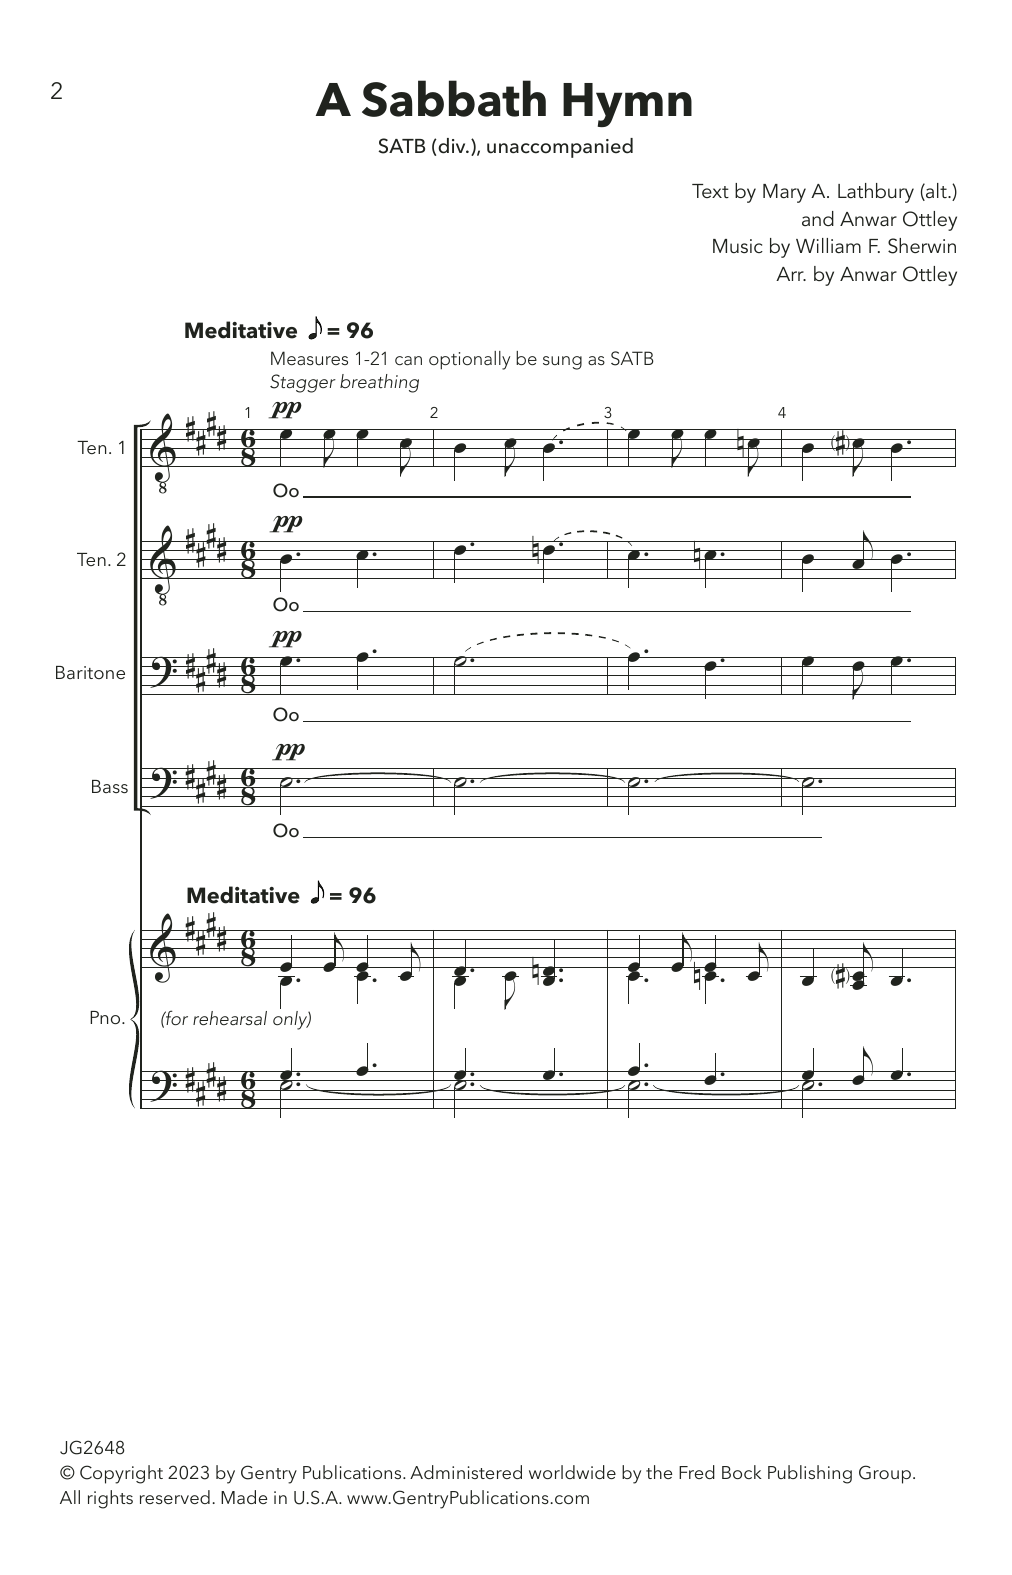 William F. Sherwin A Sabbath Hymn (arr. Anwar Ottley) Sheet Music Notes & Chords for Choir - Download or Print PDF